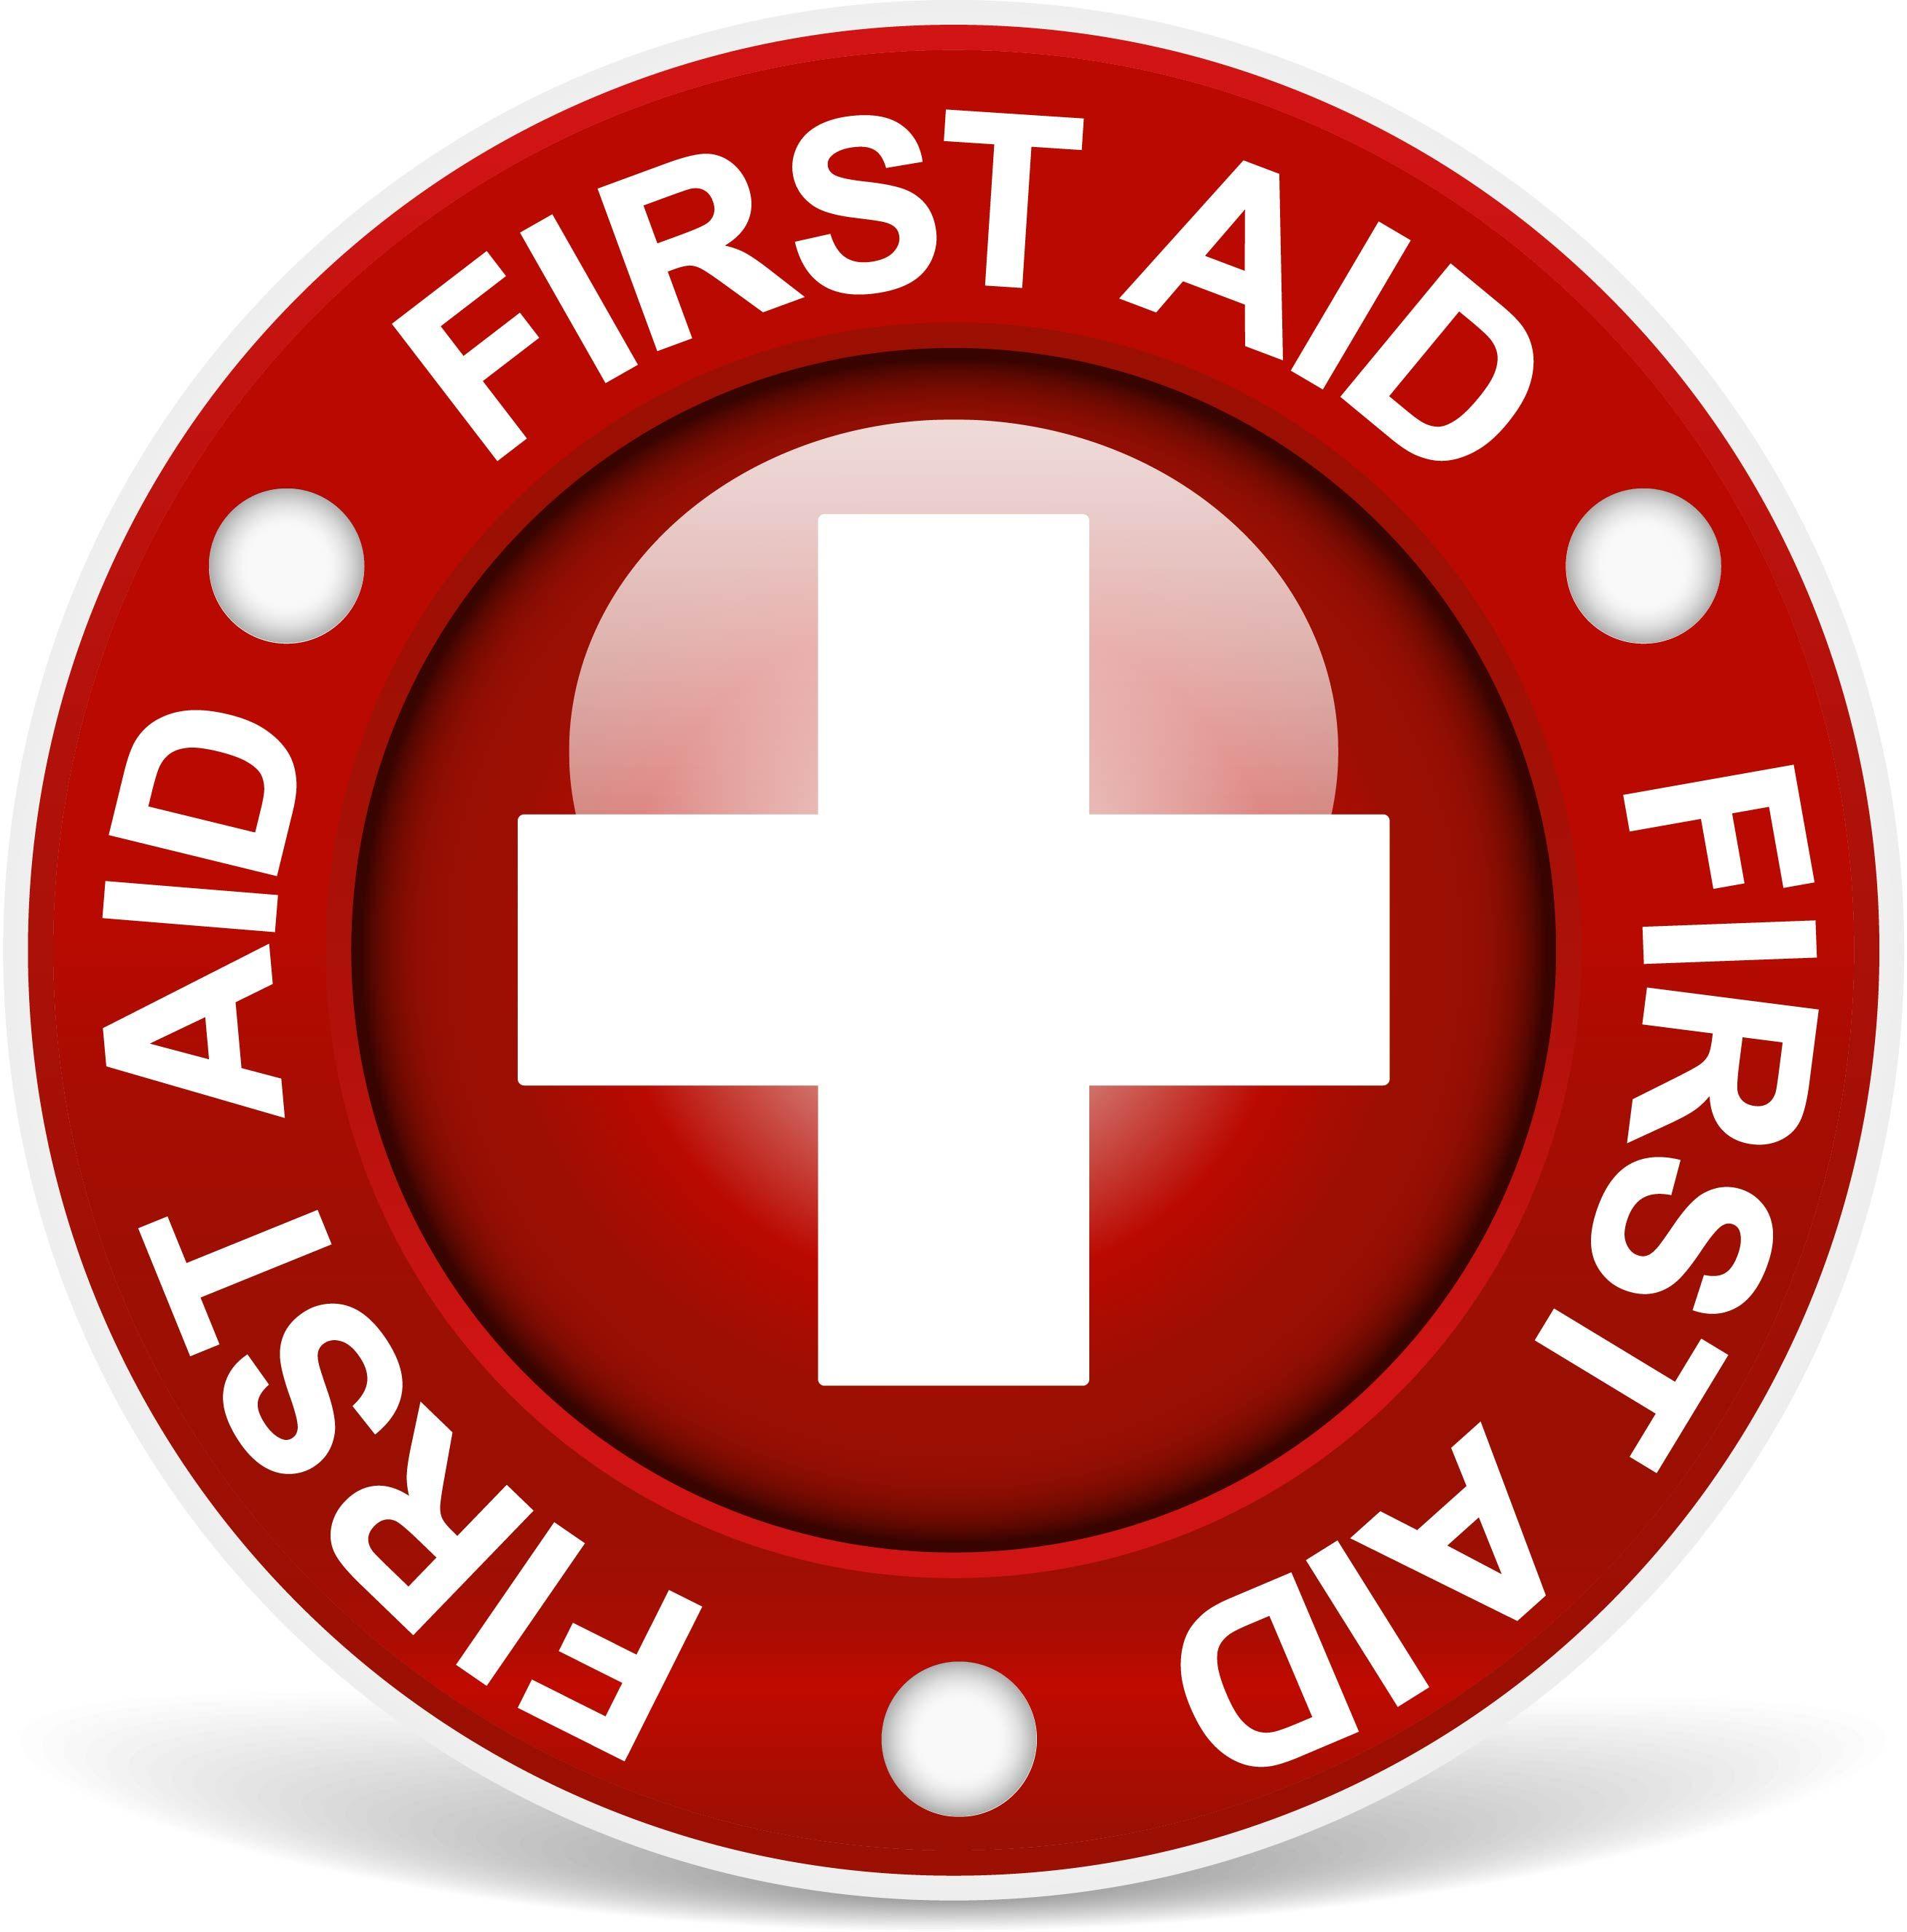 2619x2654px 318.1 KB First Aid